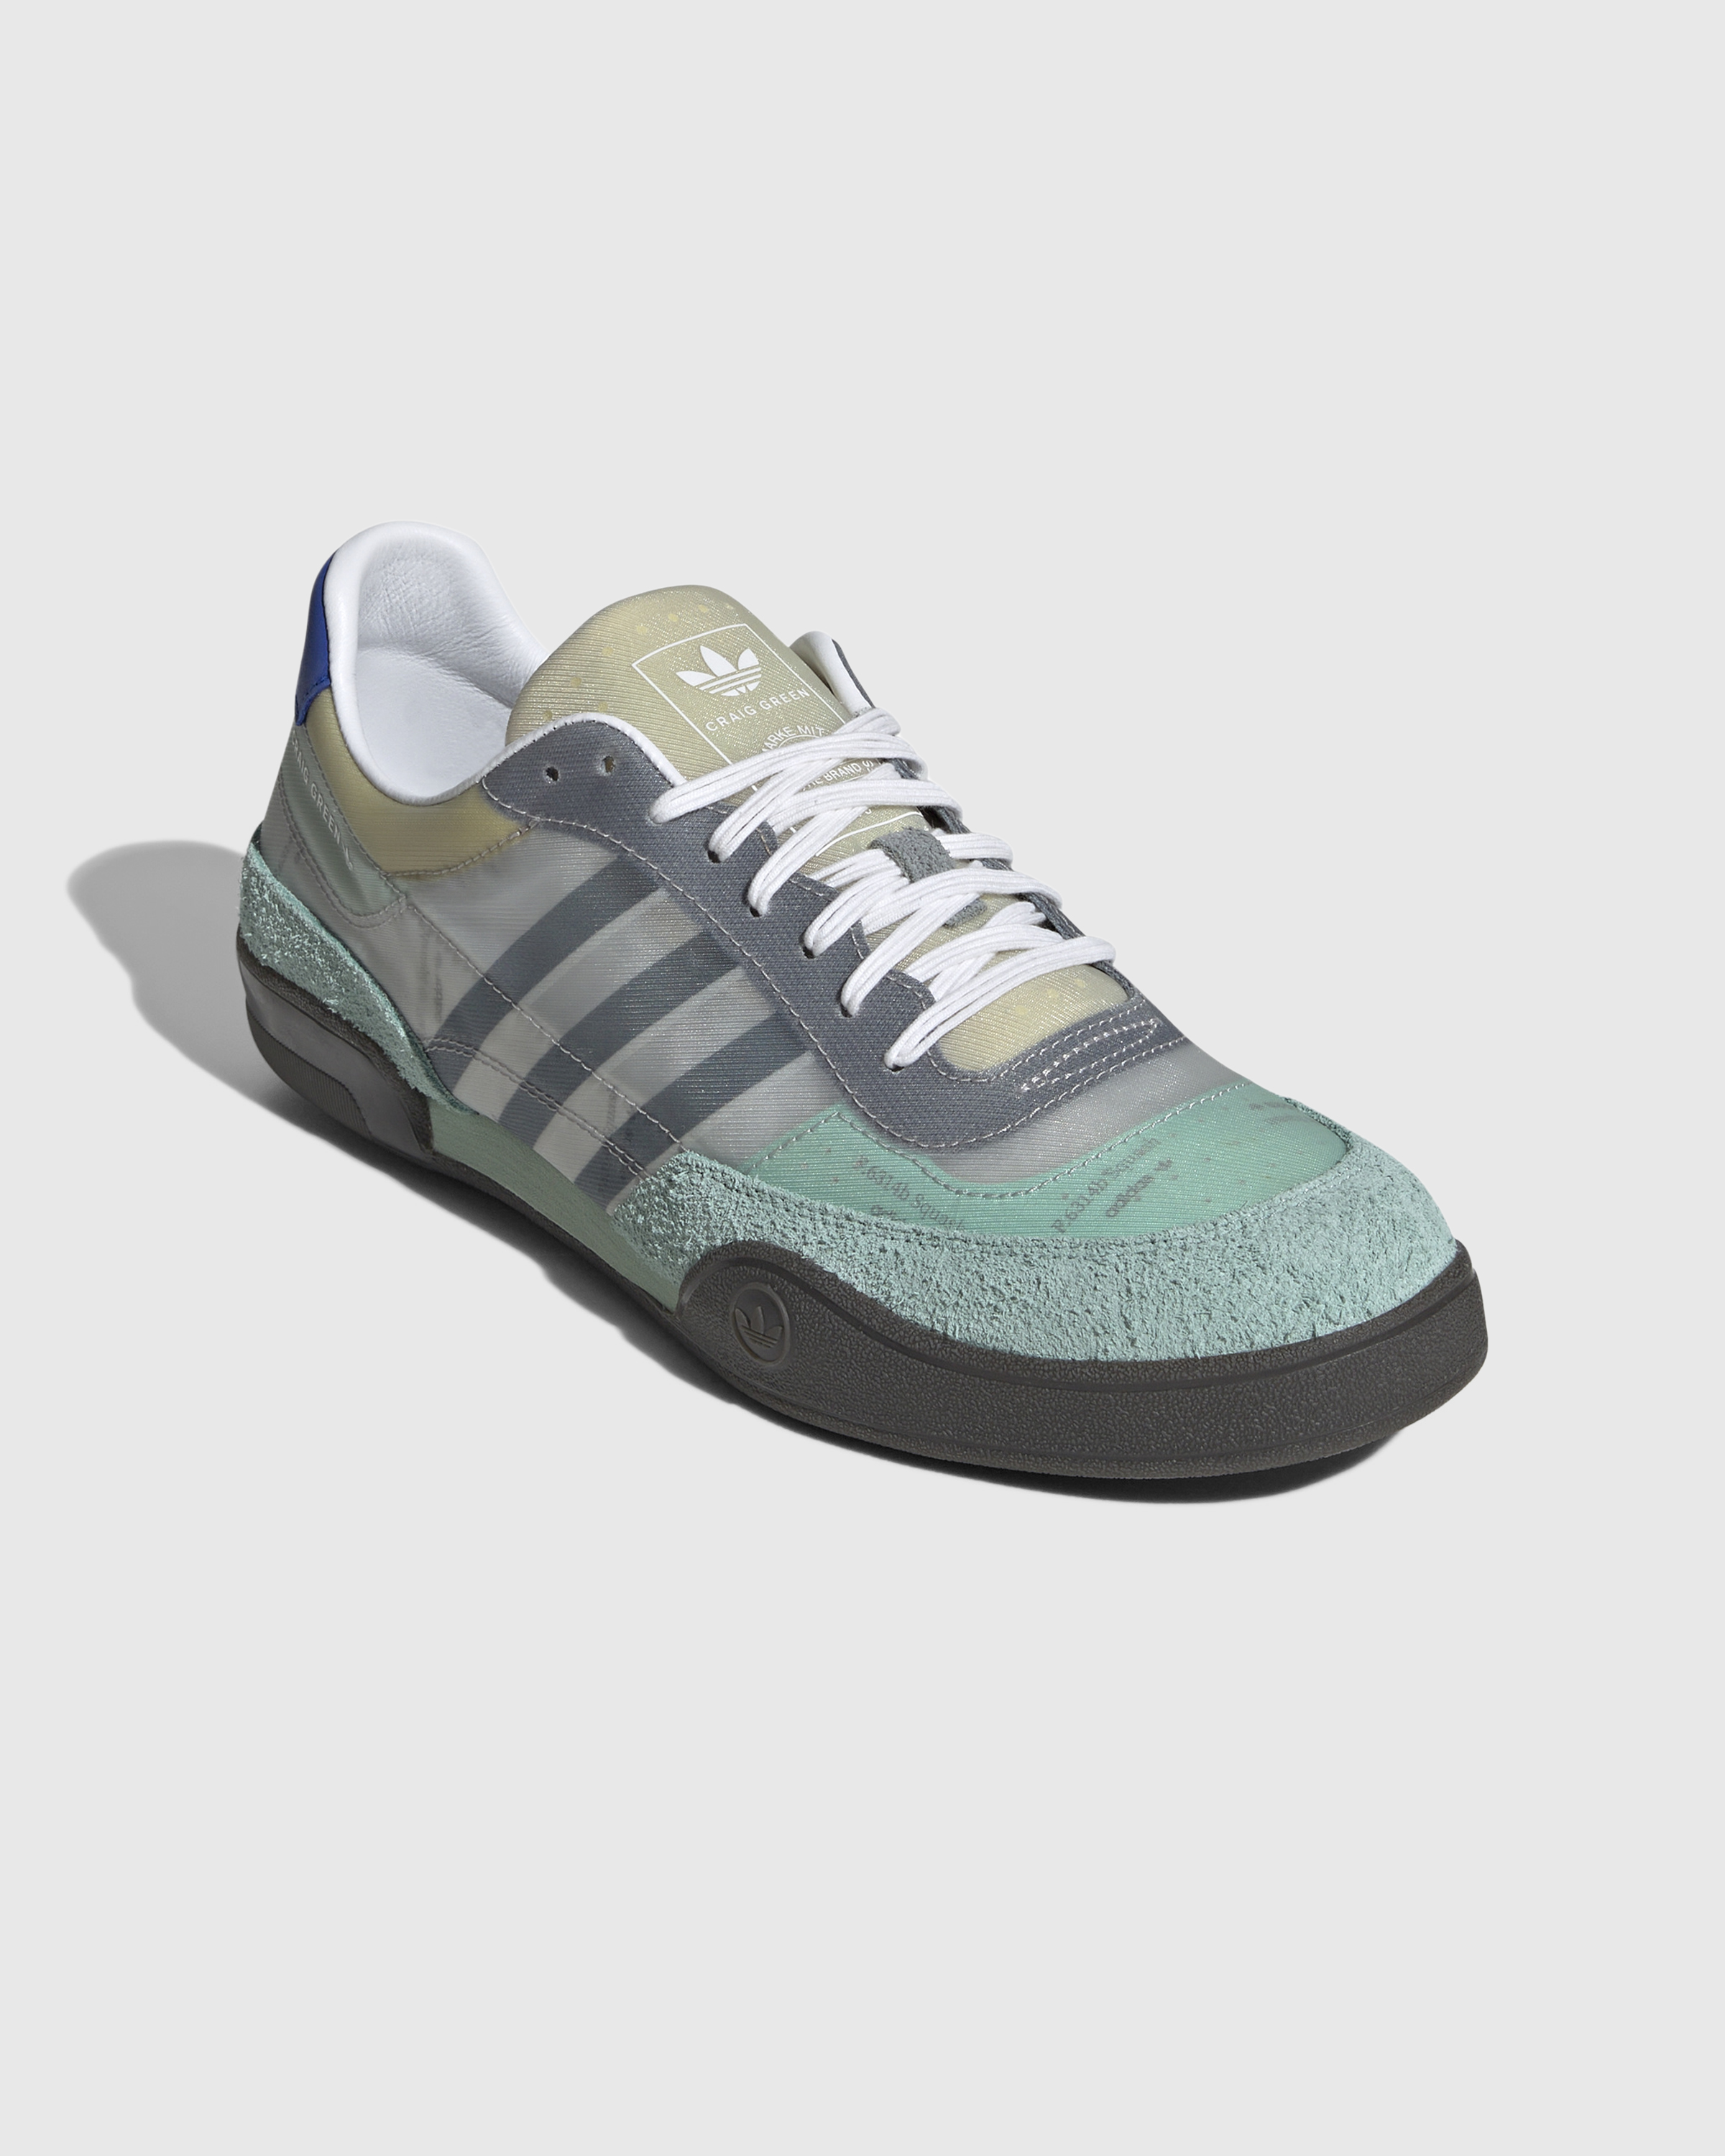 Adidas x Craig Green – Squash Polta Akh Green/Core White/Gum - Low Top Sneakers - Green - Image 3